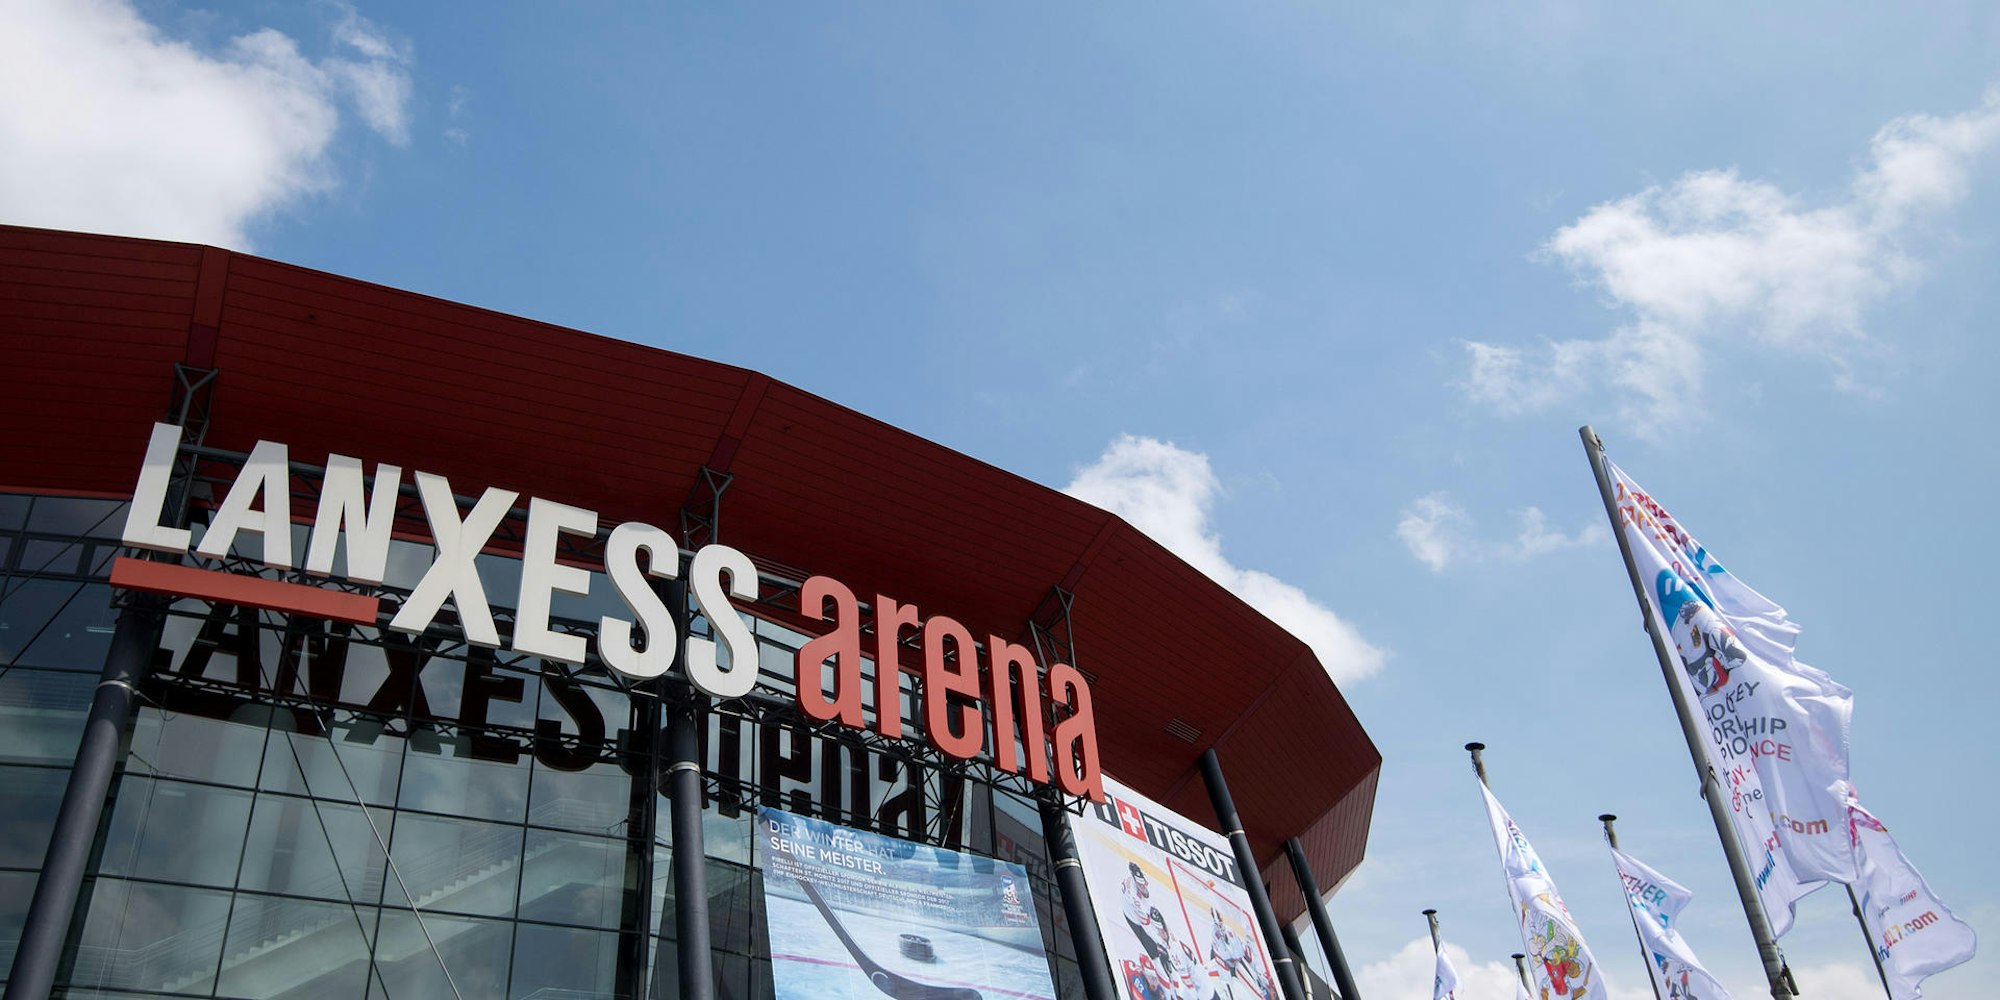 Lanxess-Arena in Köln